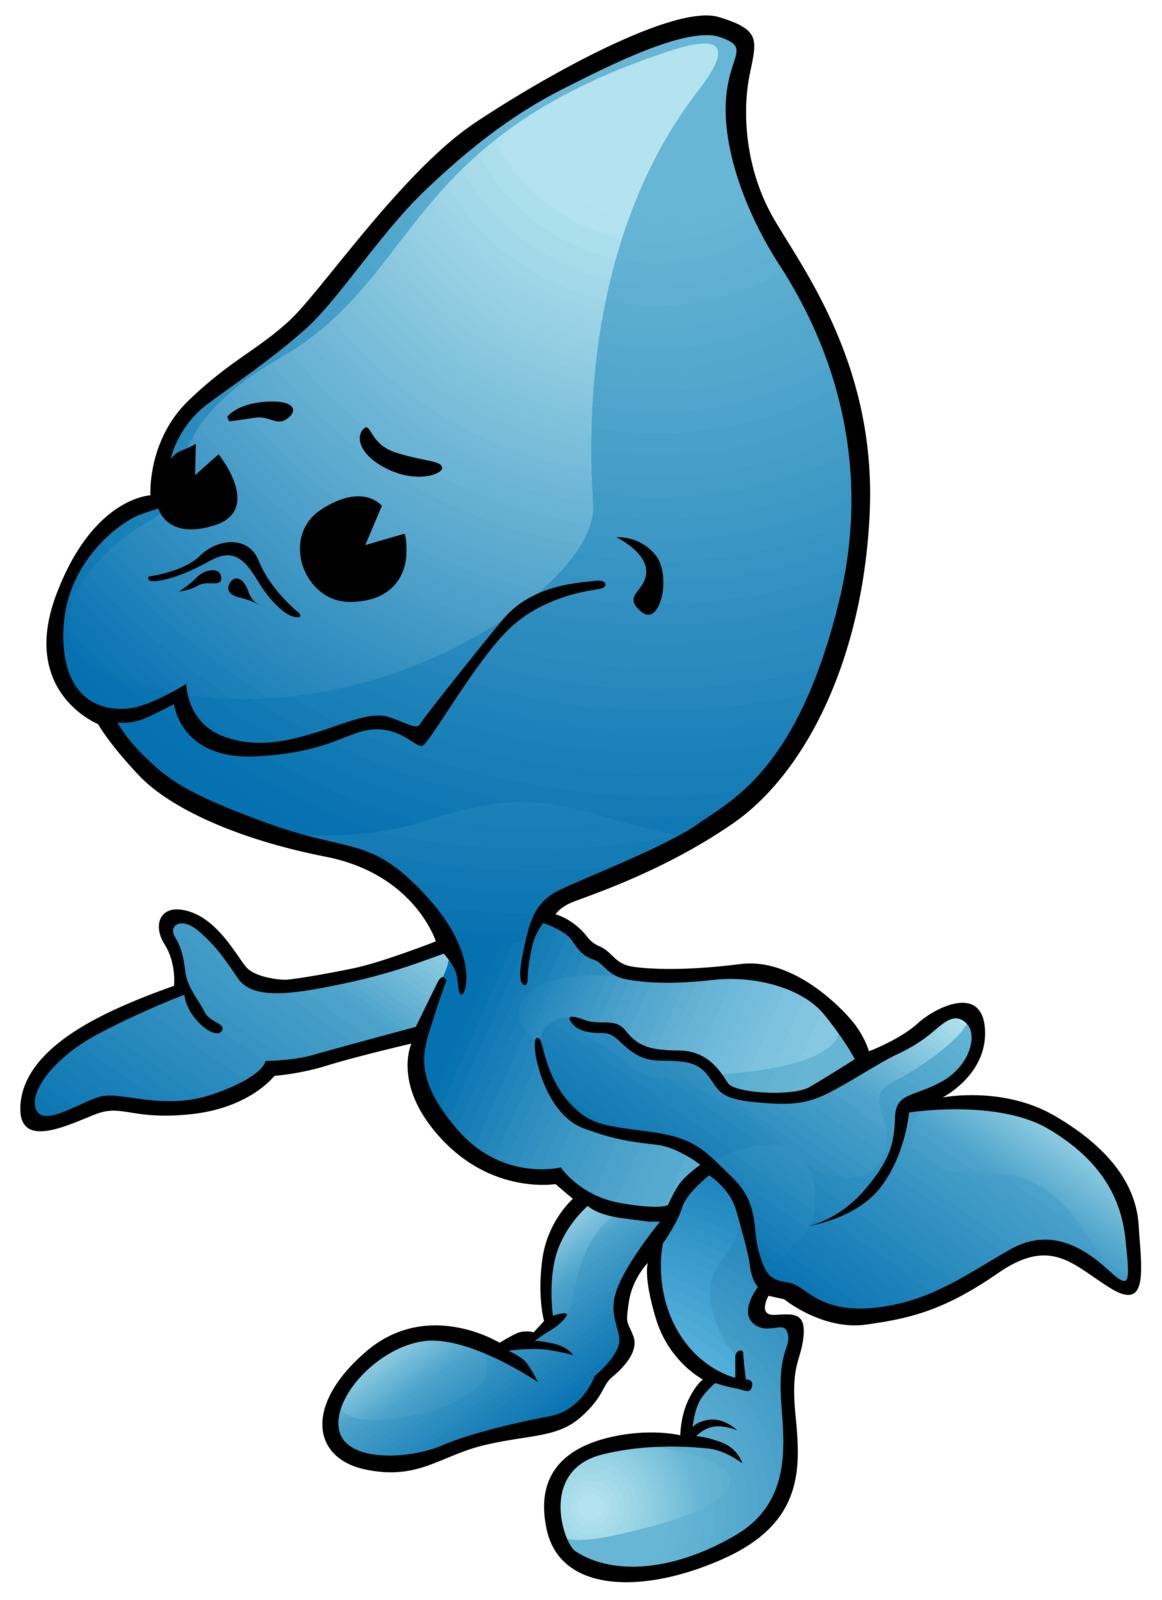 Water Drop - Colored Cartoon Character, Vector